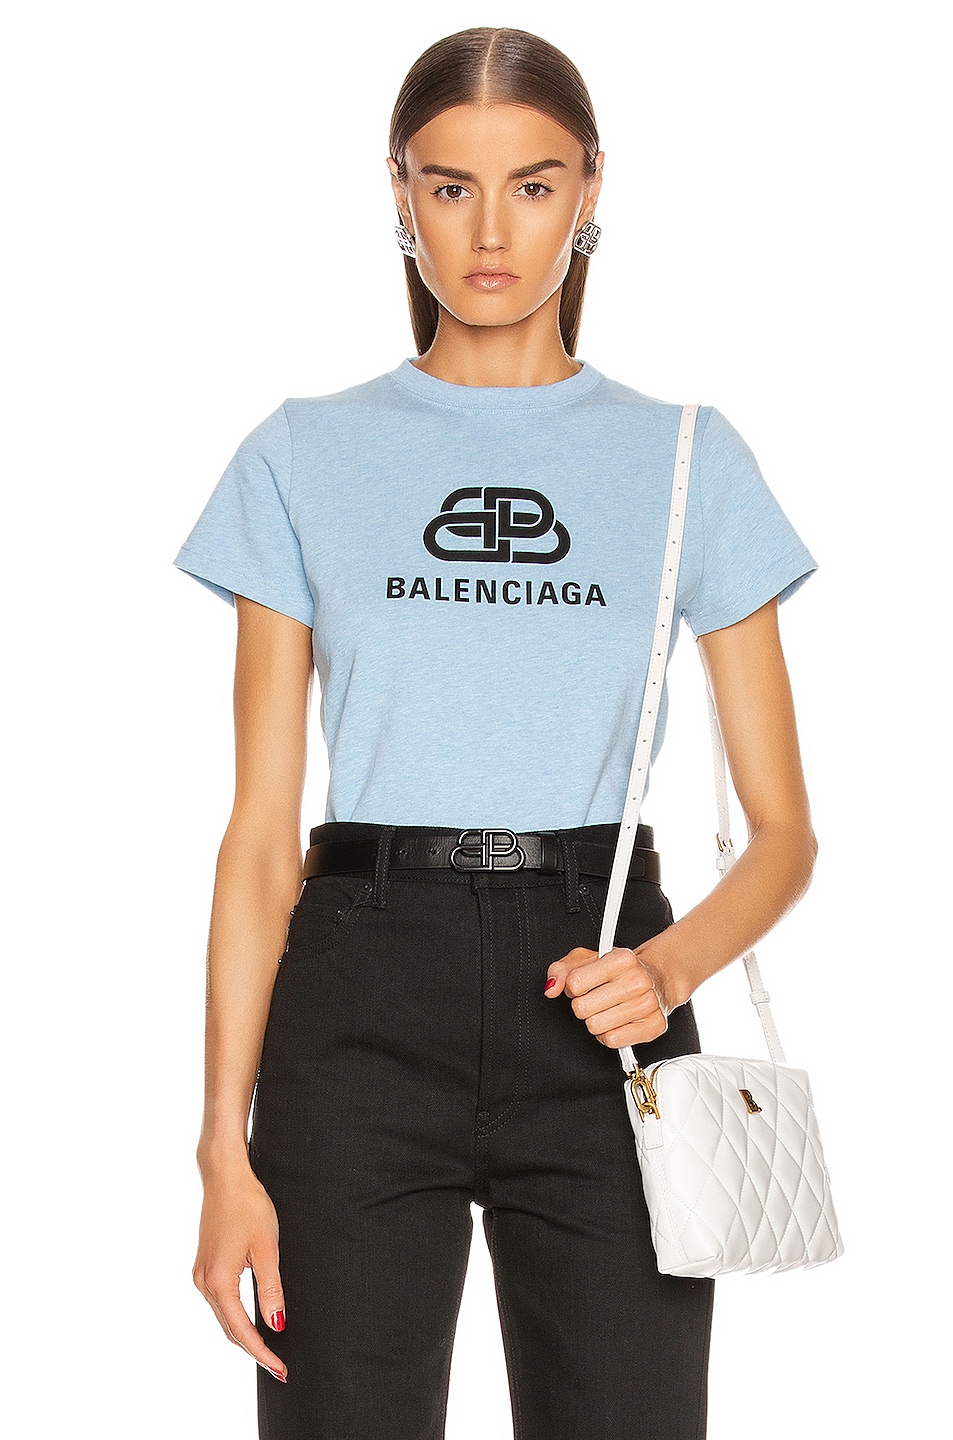 Balenciaga BB Fitted T Shirt in Baby Blue | FWRD